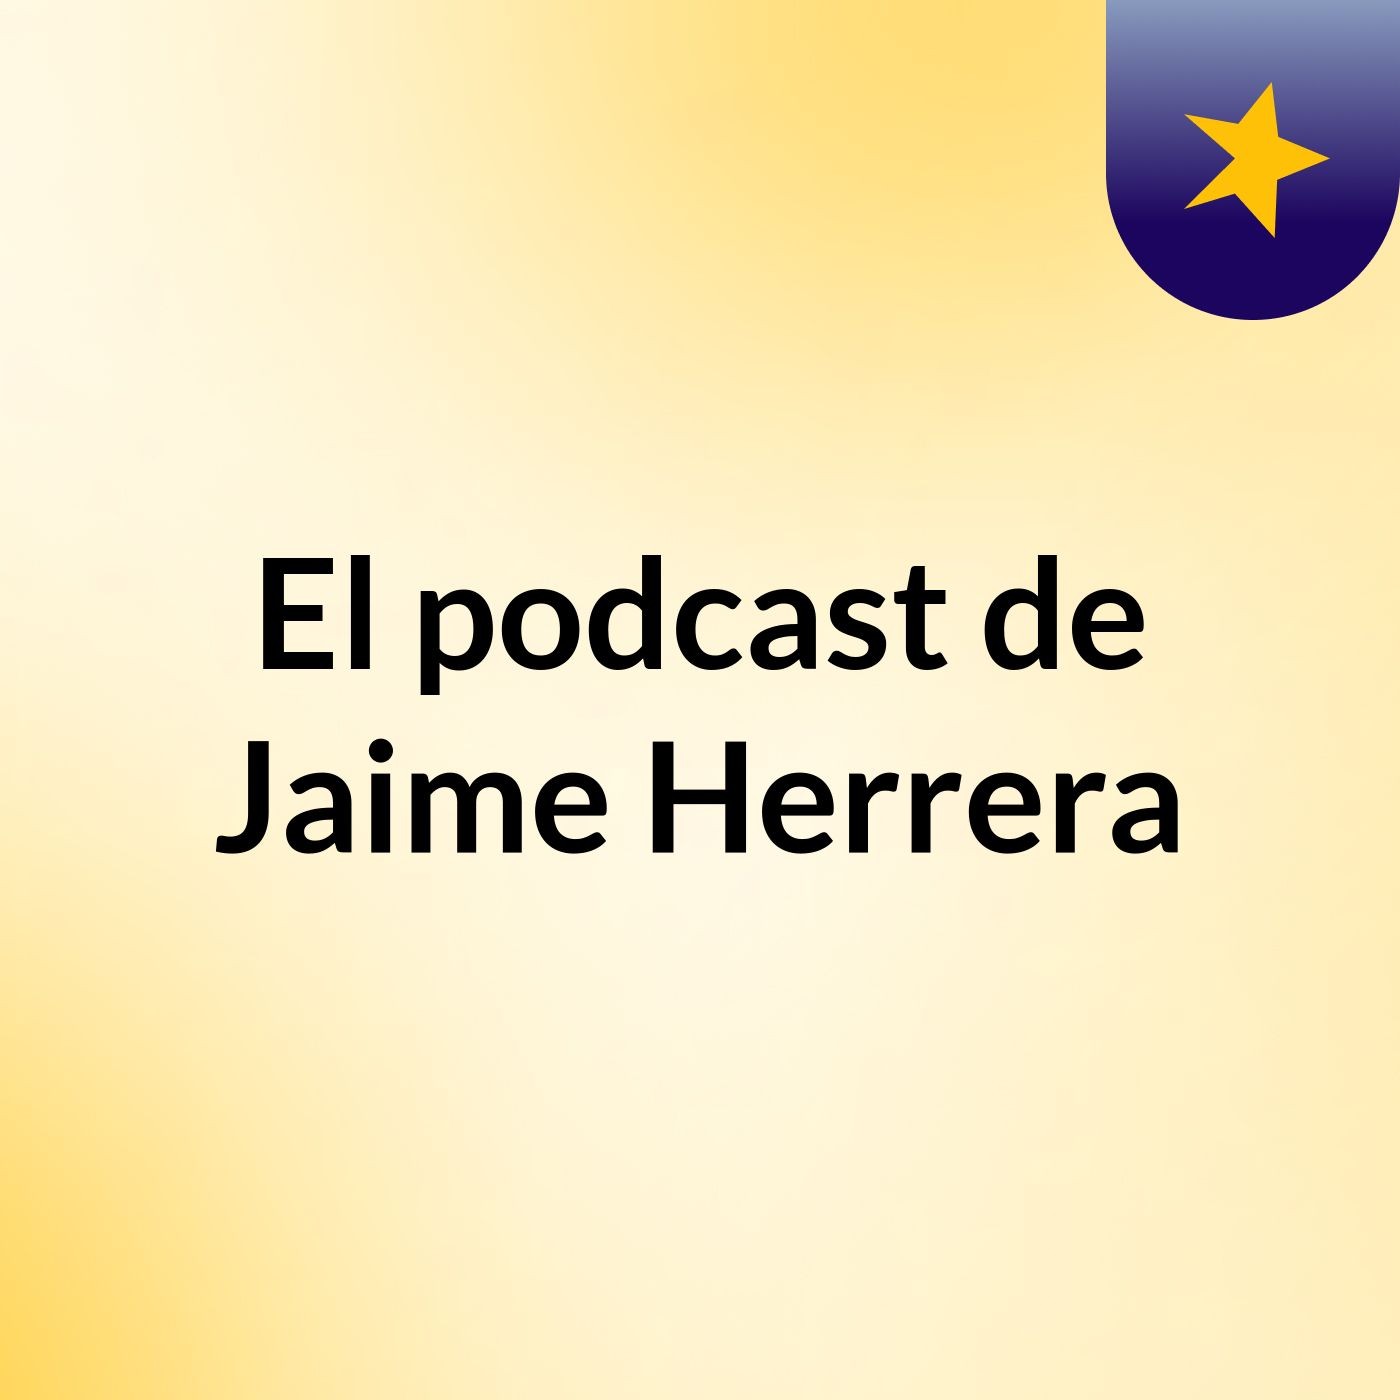 Ehhjhjjhhhhhpisodio 8 - El podcast de Jaime Herrera